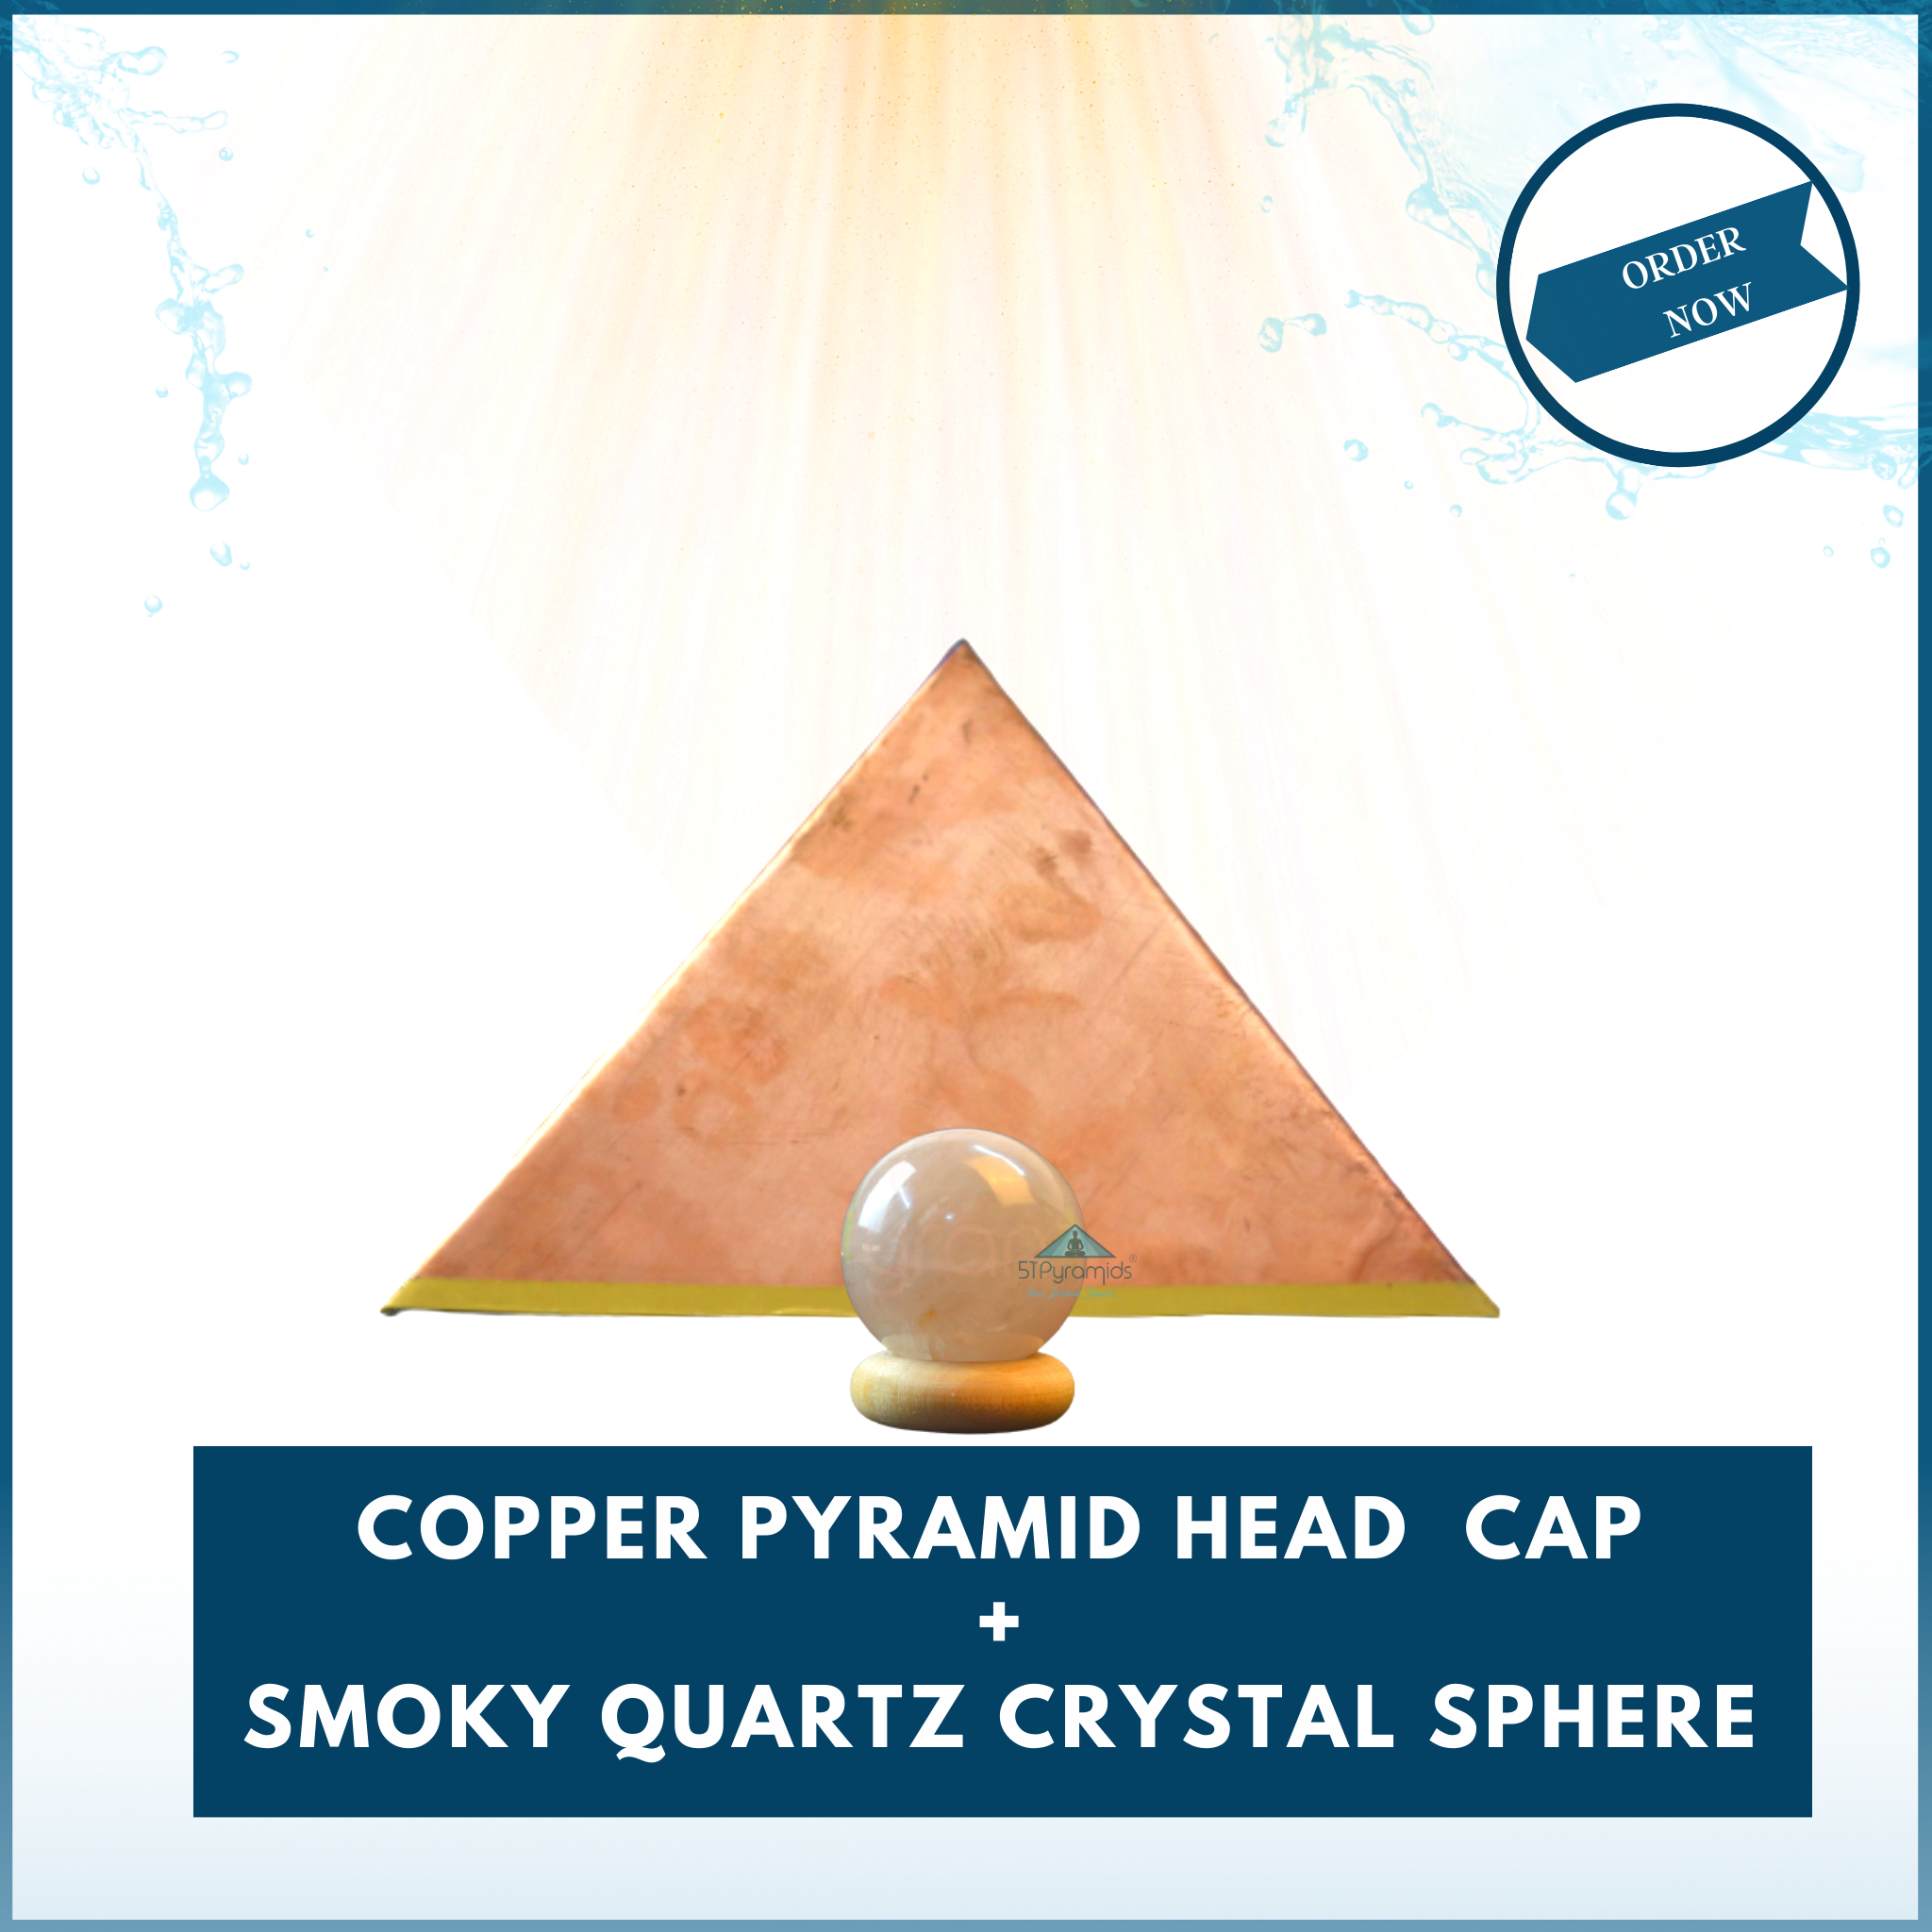 MeditationCombo - Copper Pyramid Head Cap + Smoky Quartz Crystal Sphere for Deep State of Meditation